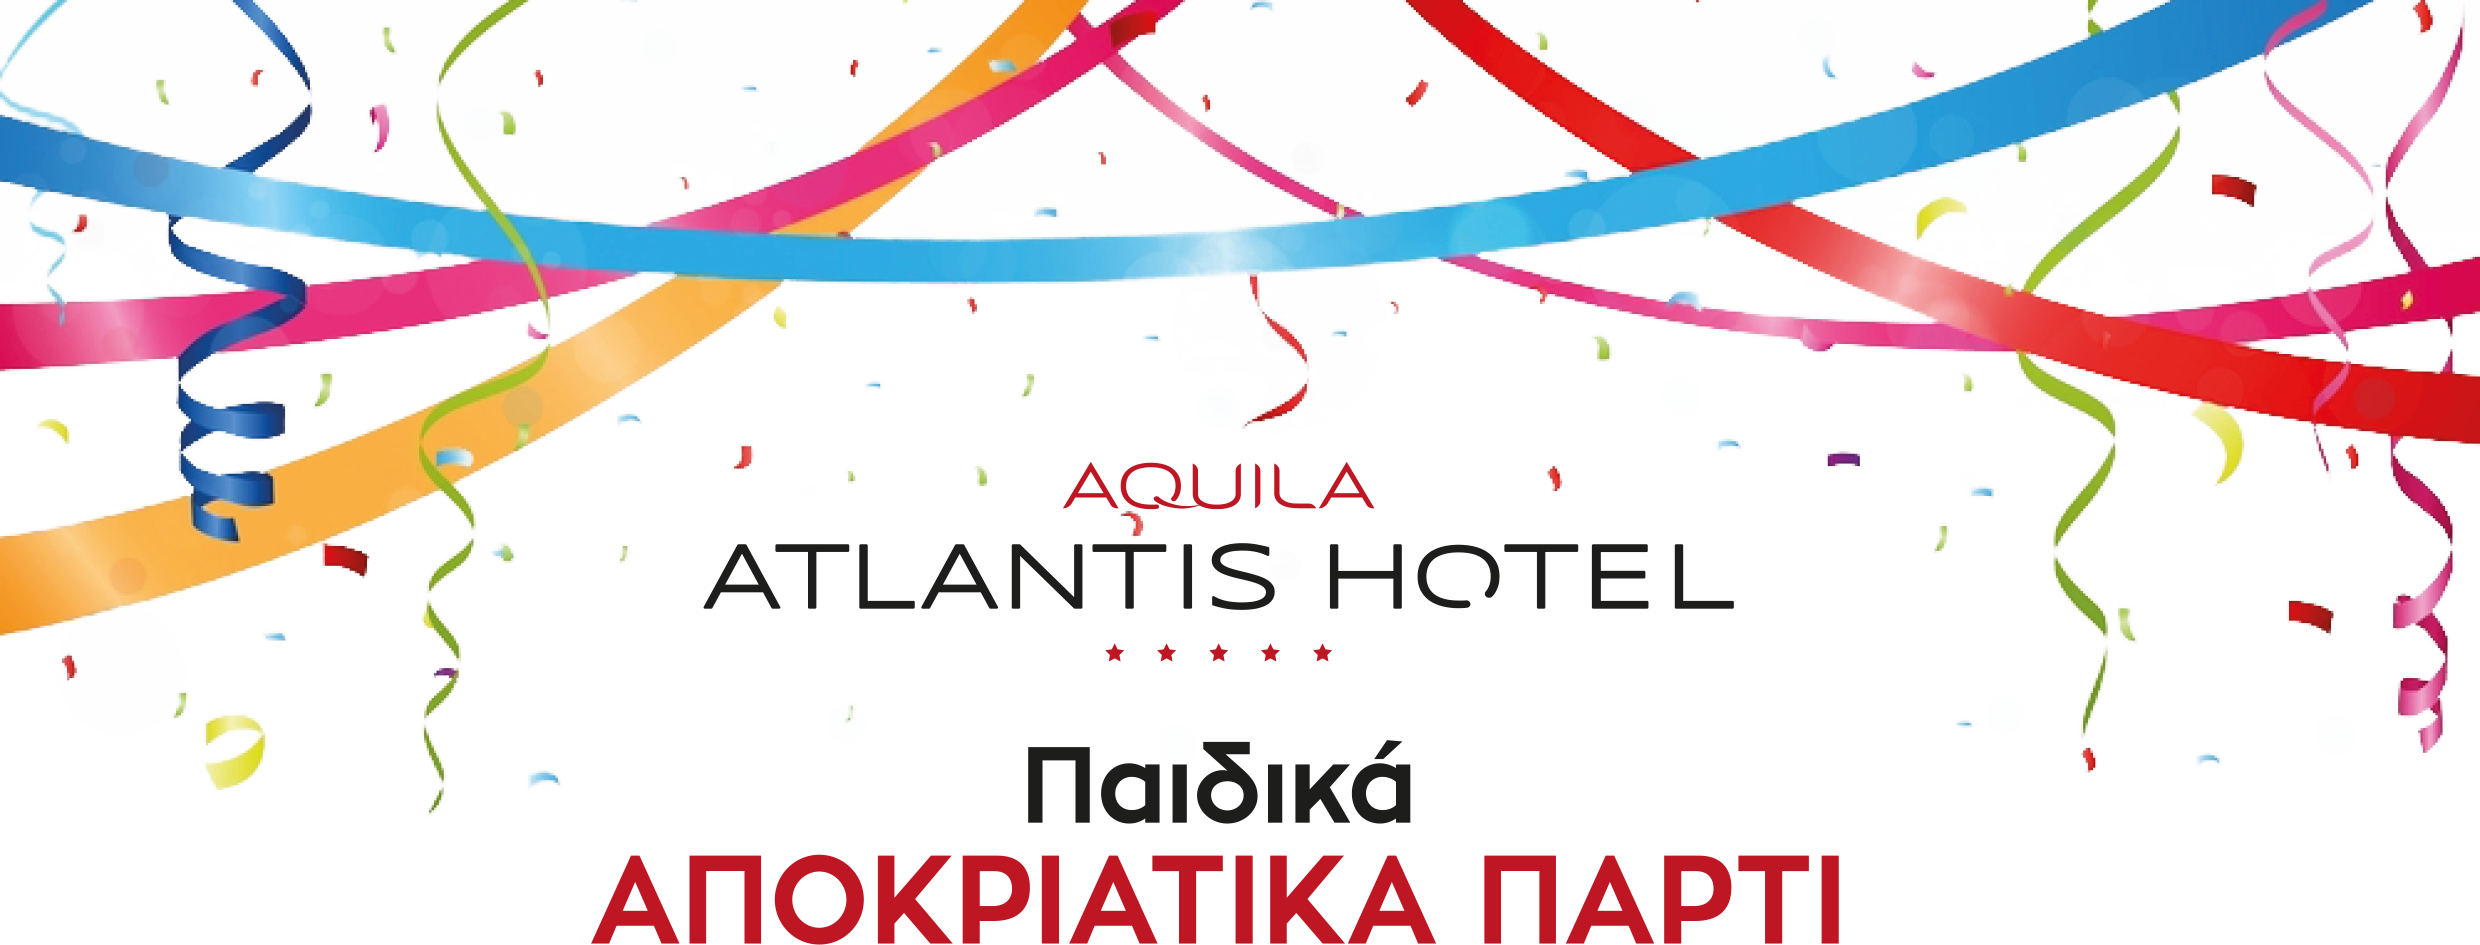 Aquila Atlantis hotel